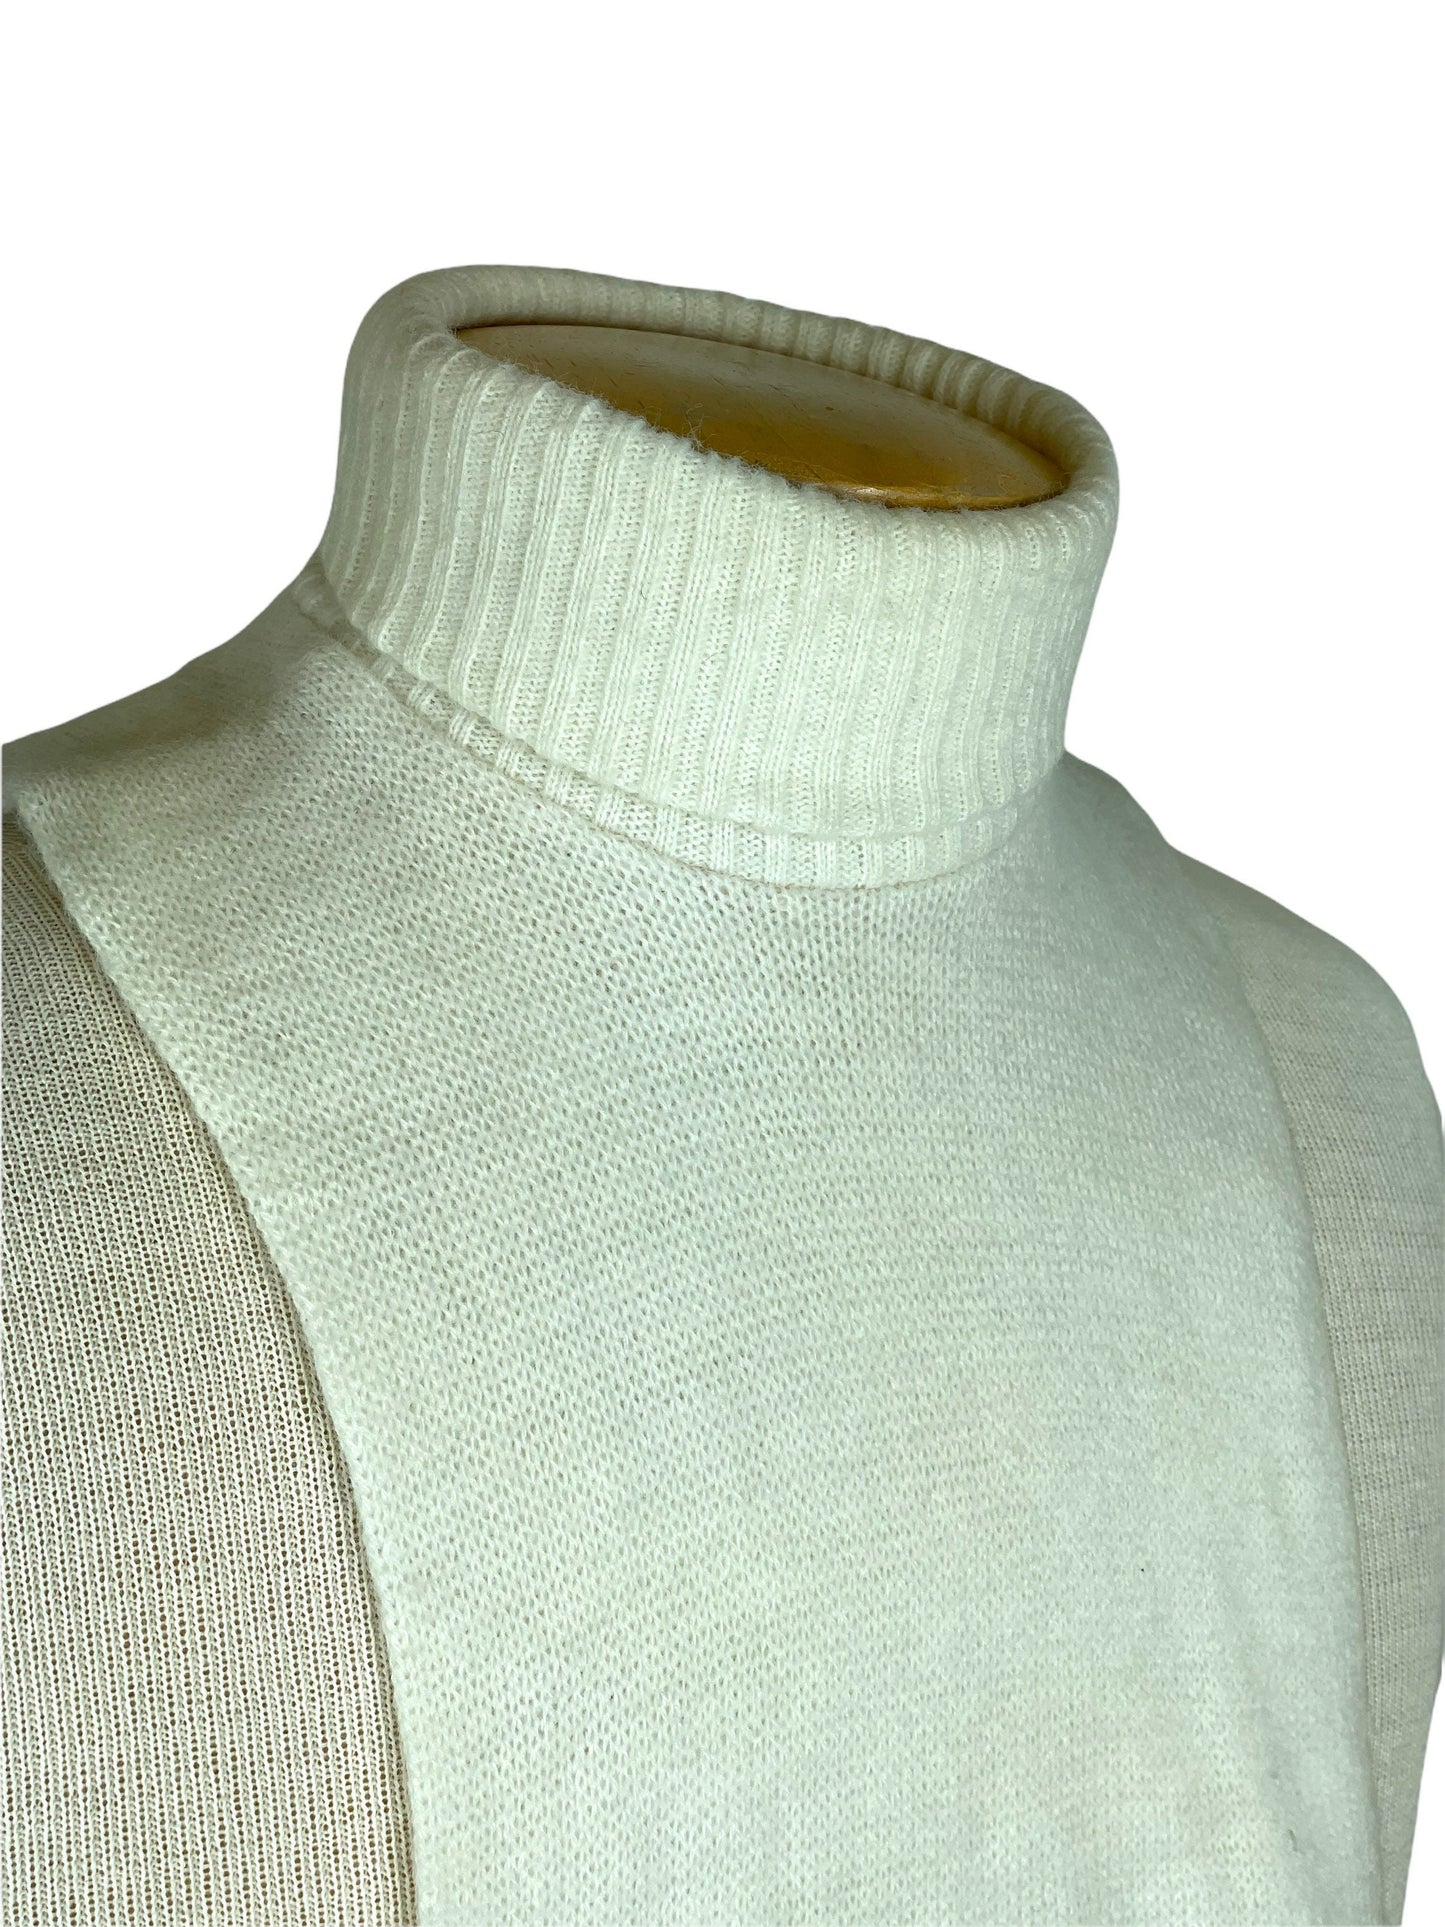 1970s white turtleneck dickie sweater